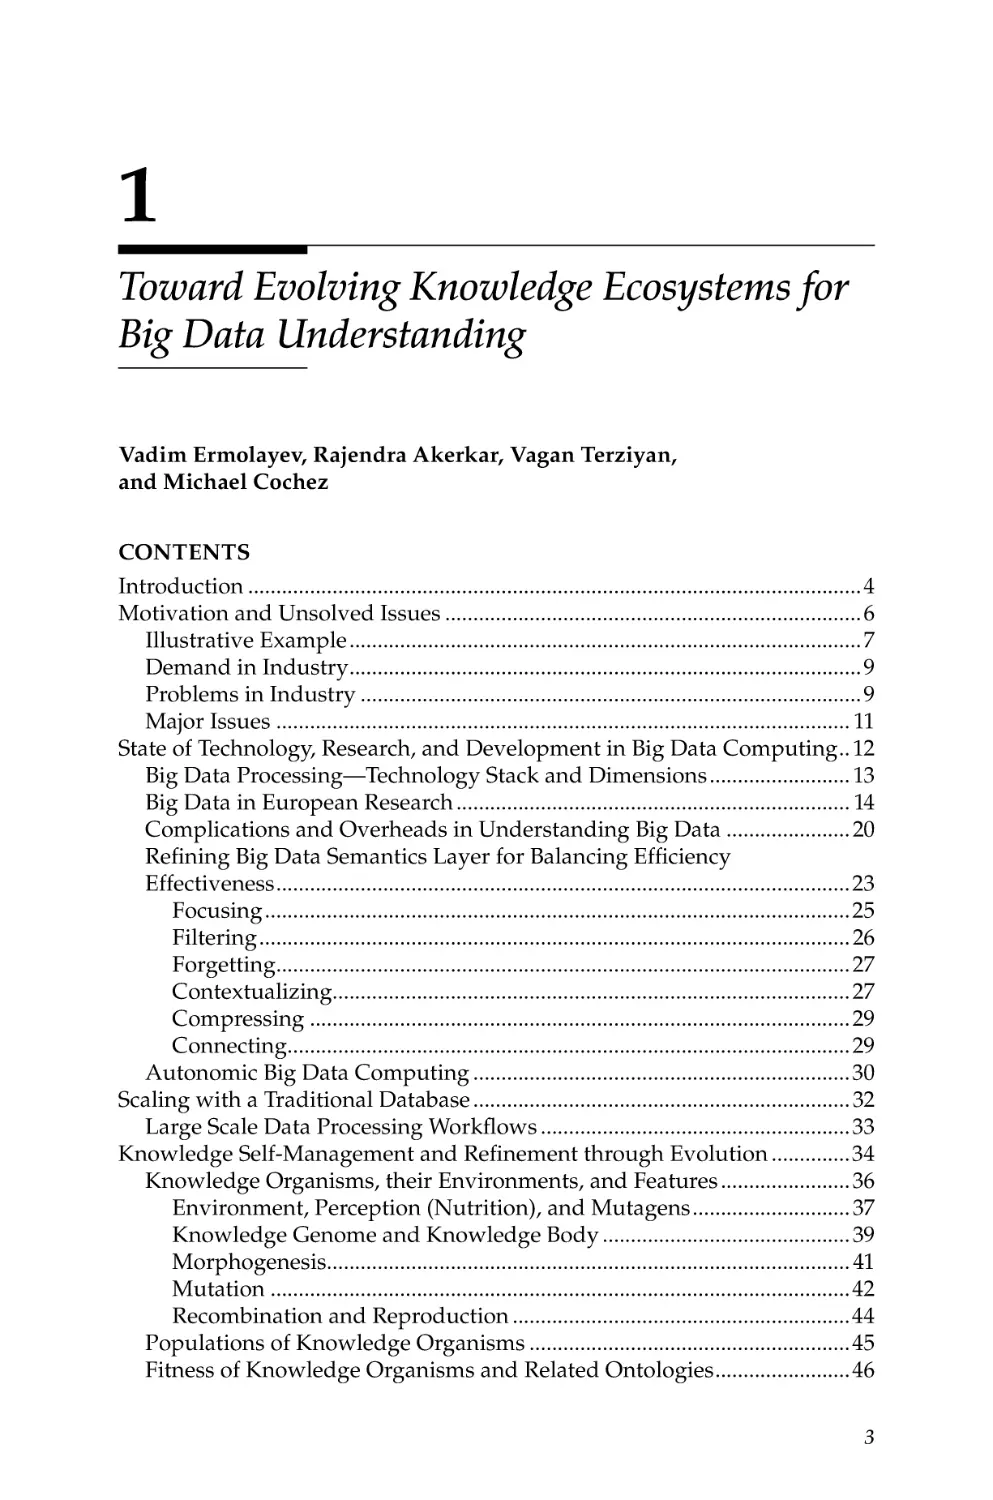 1. Toward Evolving Knowledge Ecosystems for Big Data Understanding